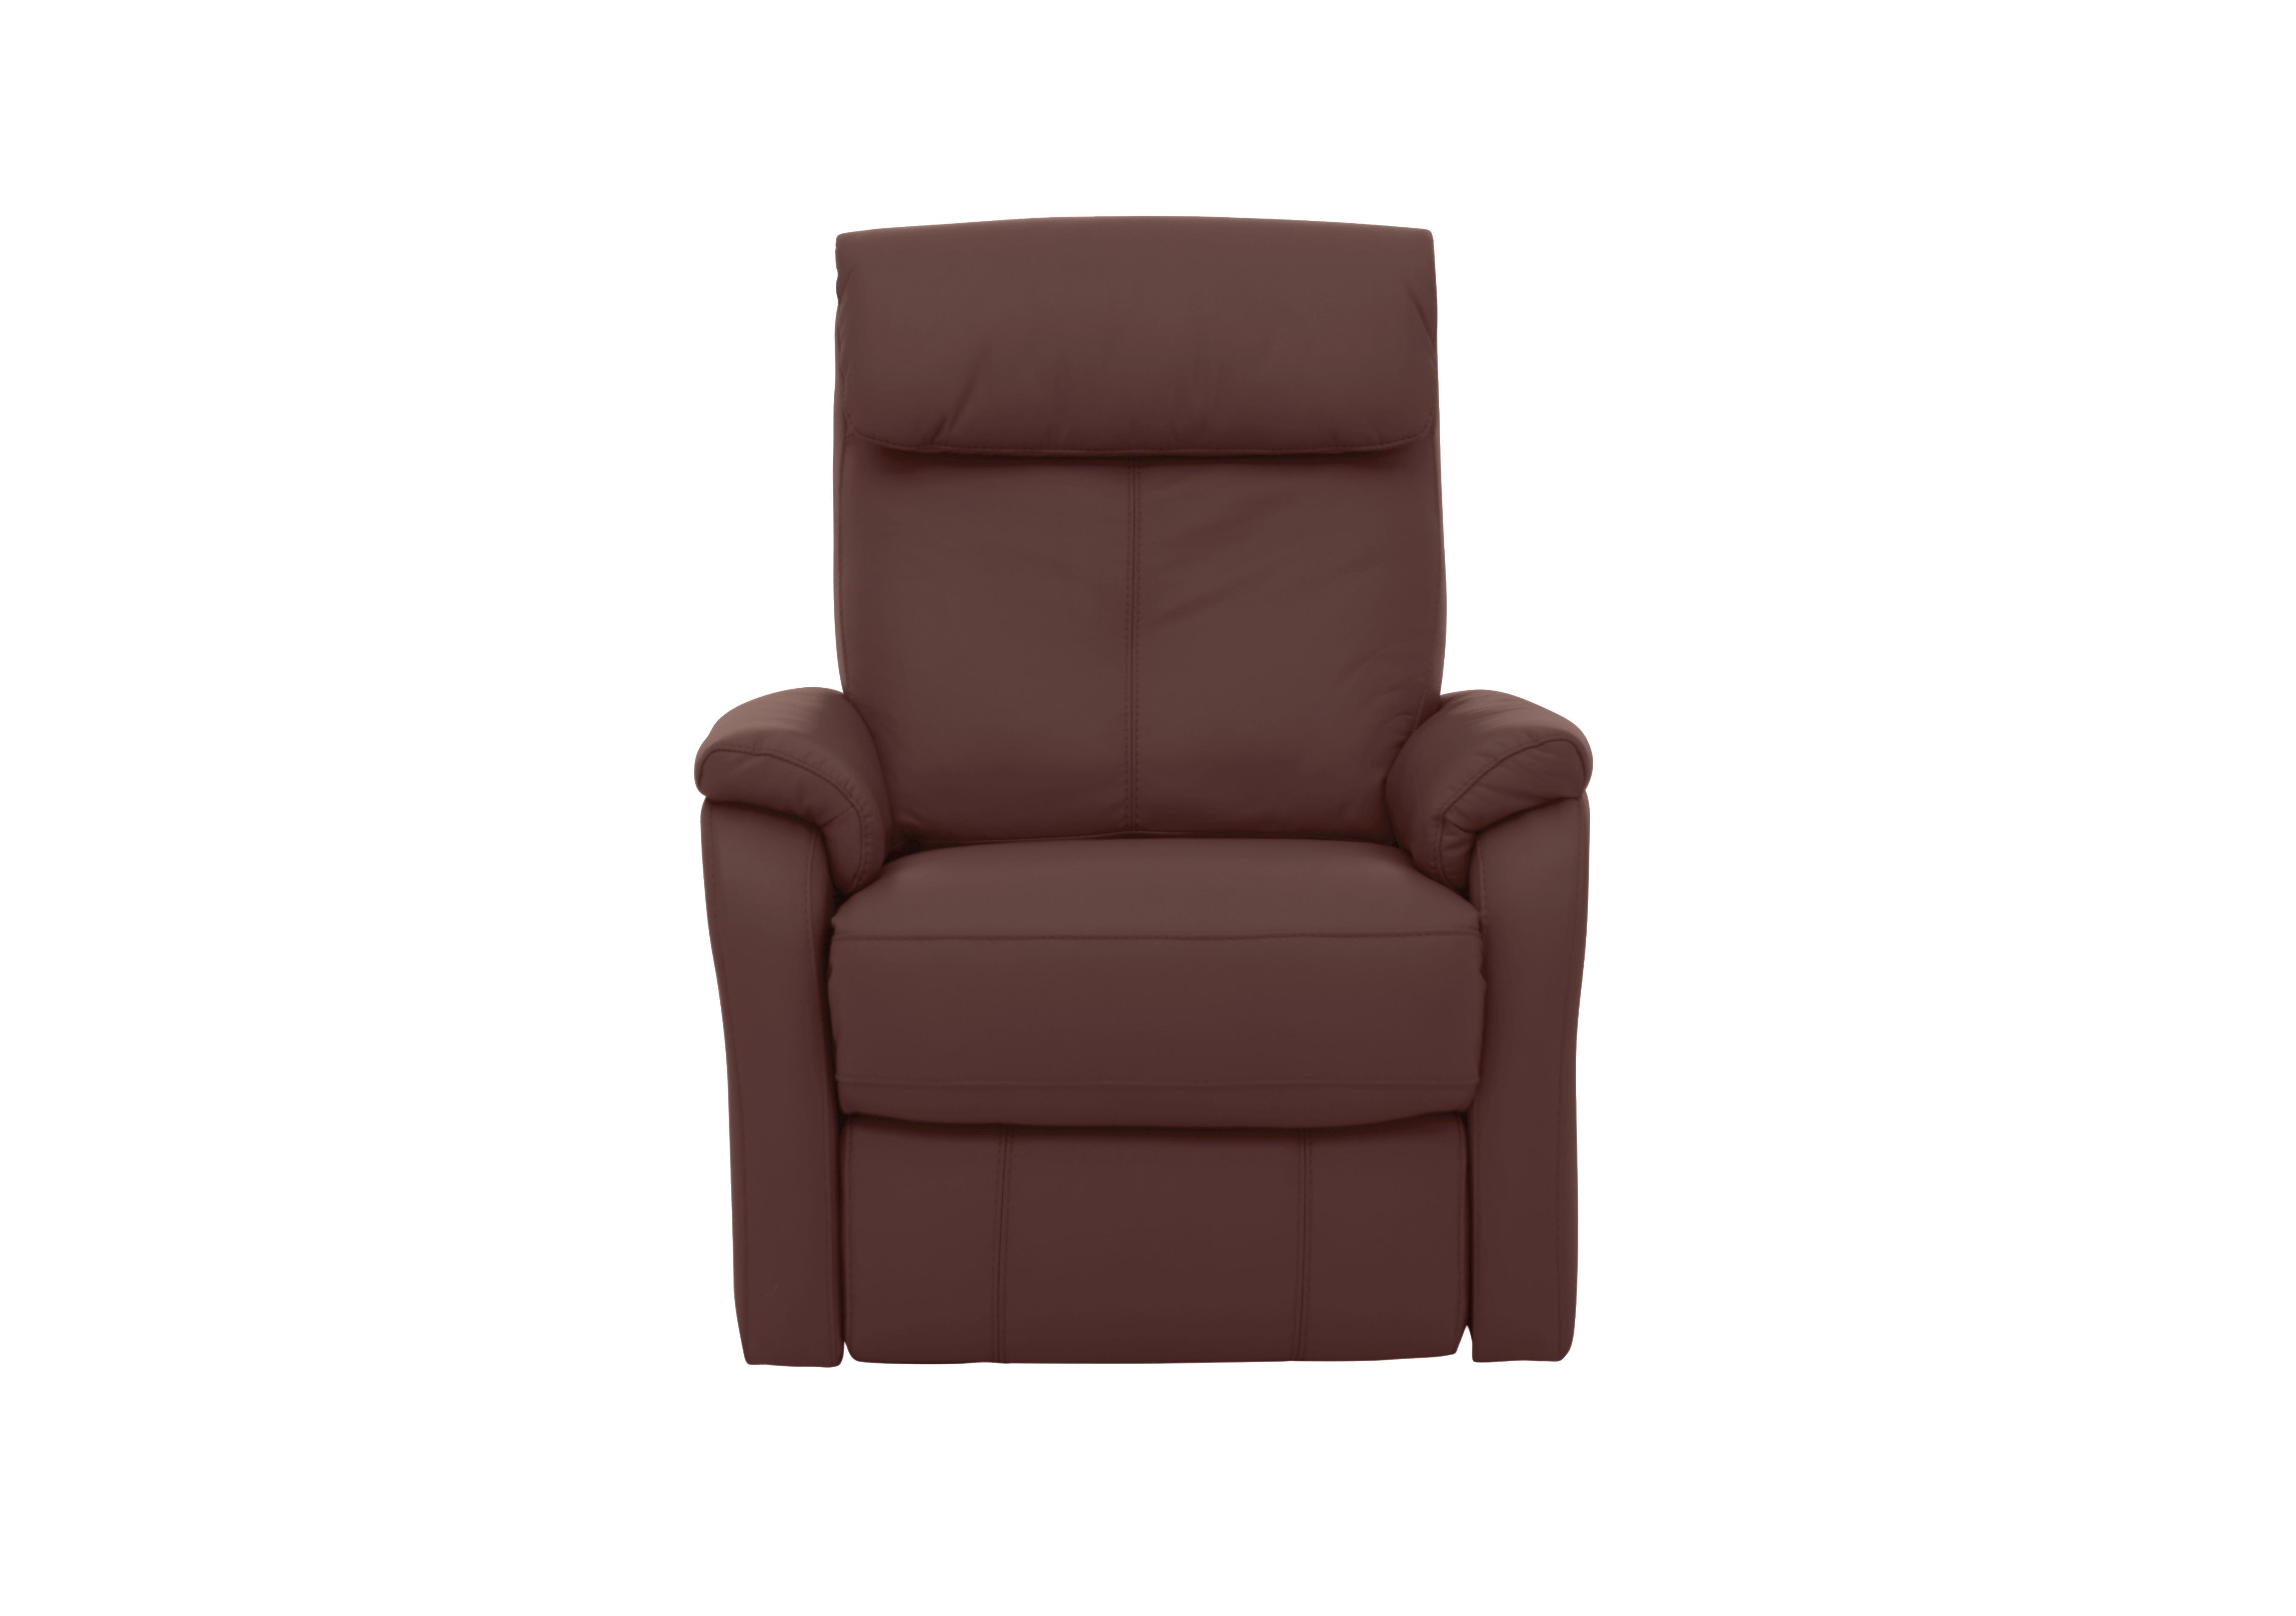 Rowan Leather Swivel Rocker Recliner Armchair in An-751b Burgundy on Furniture Village